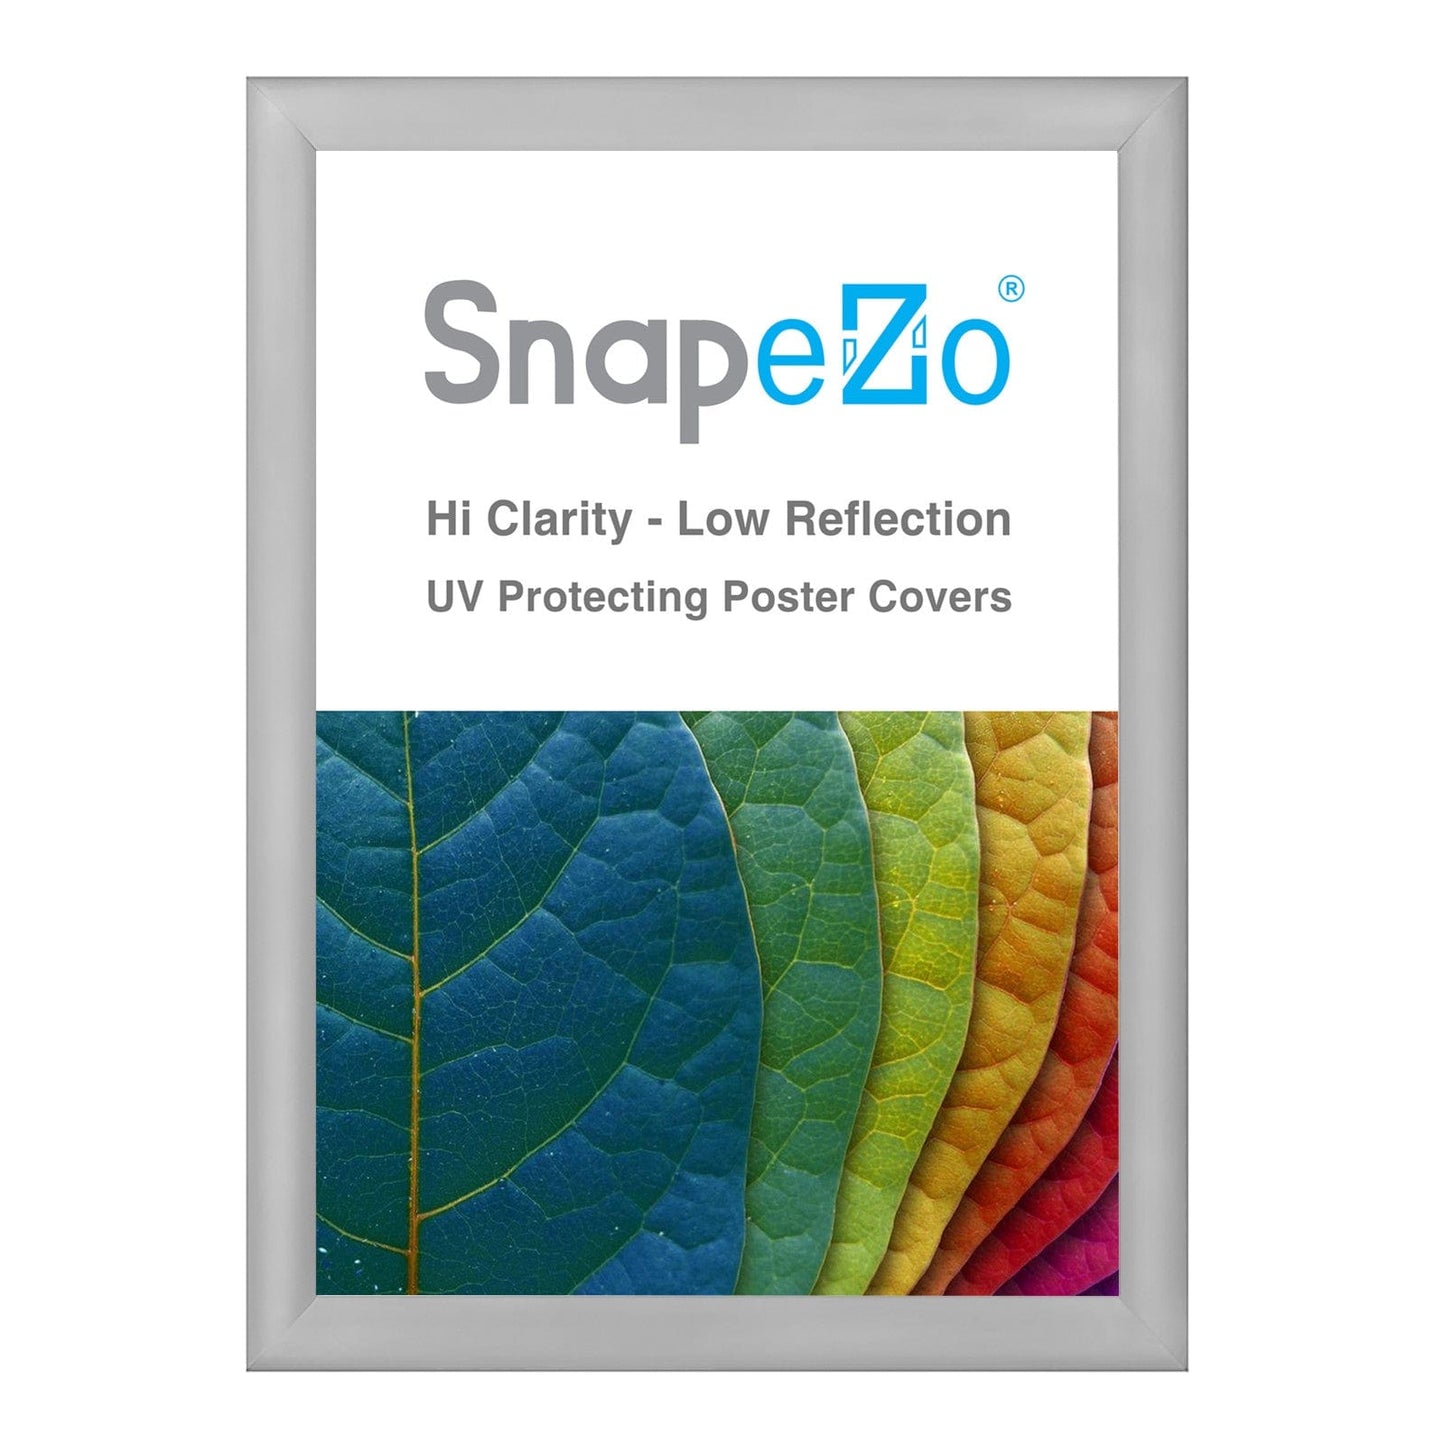 23x32 Silver SnapeZo® Snap Frame - 1.2" Profile - Snap Frames Direct